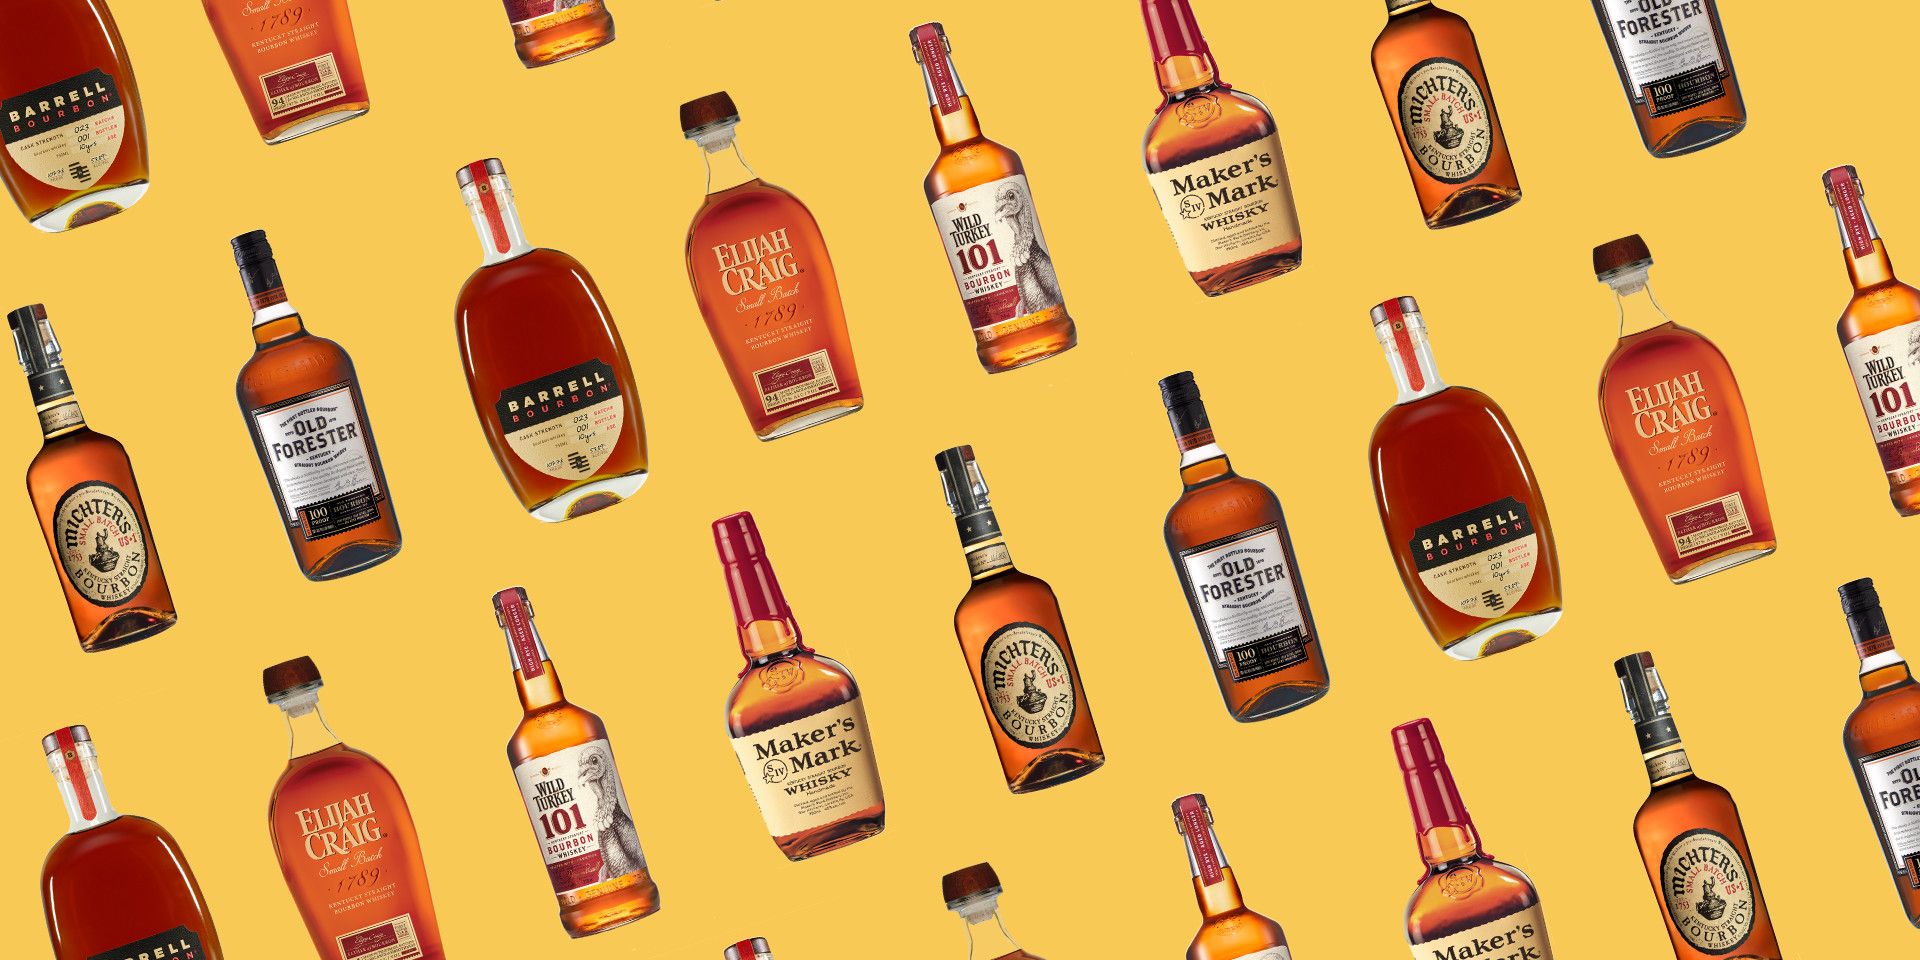 10 Best Bourbon Whiskey Brands 2022 - What Bourbon Bottles to Buy Right Now